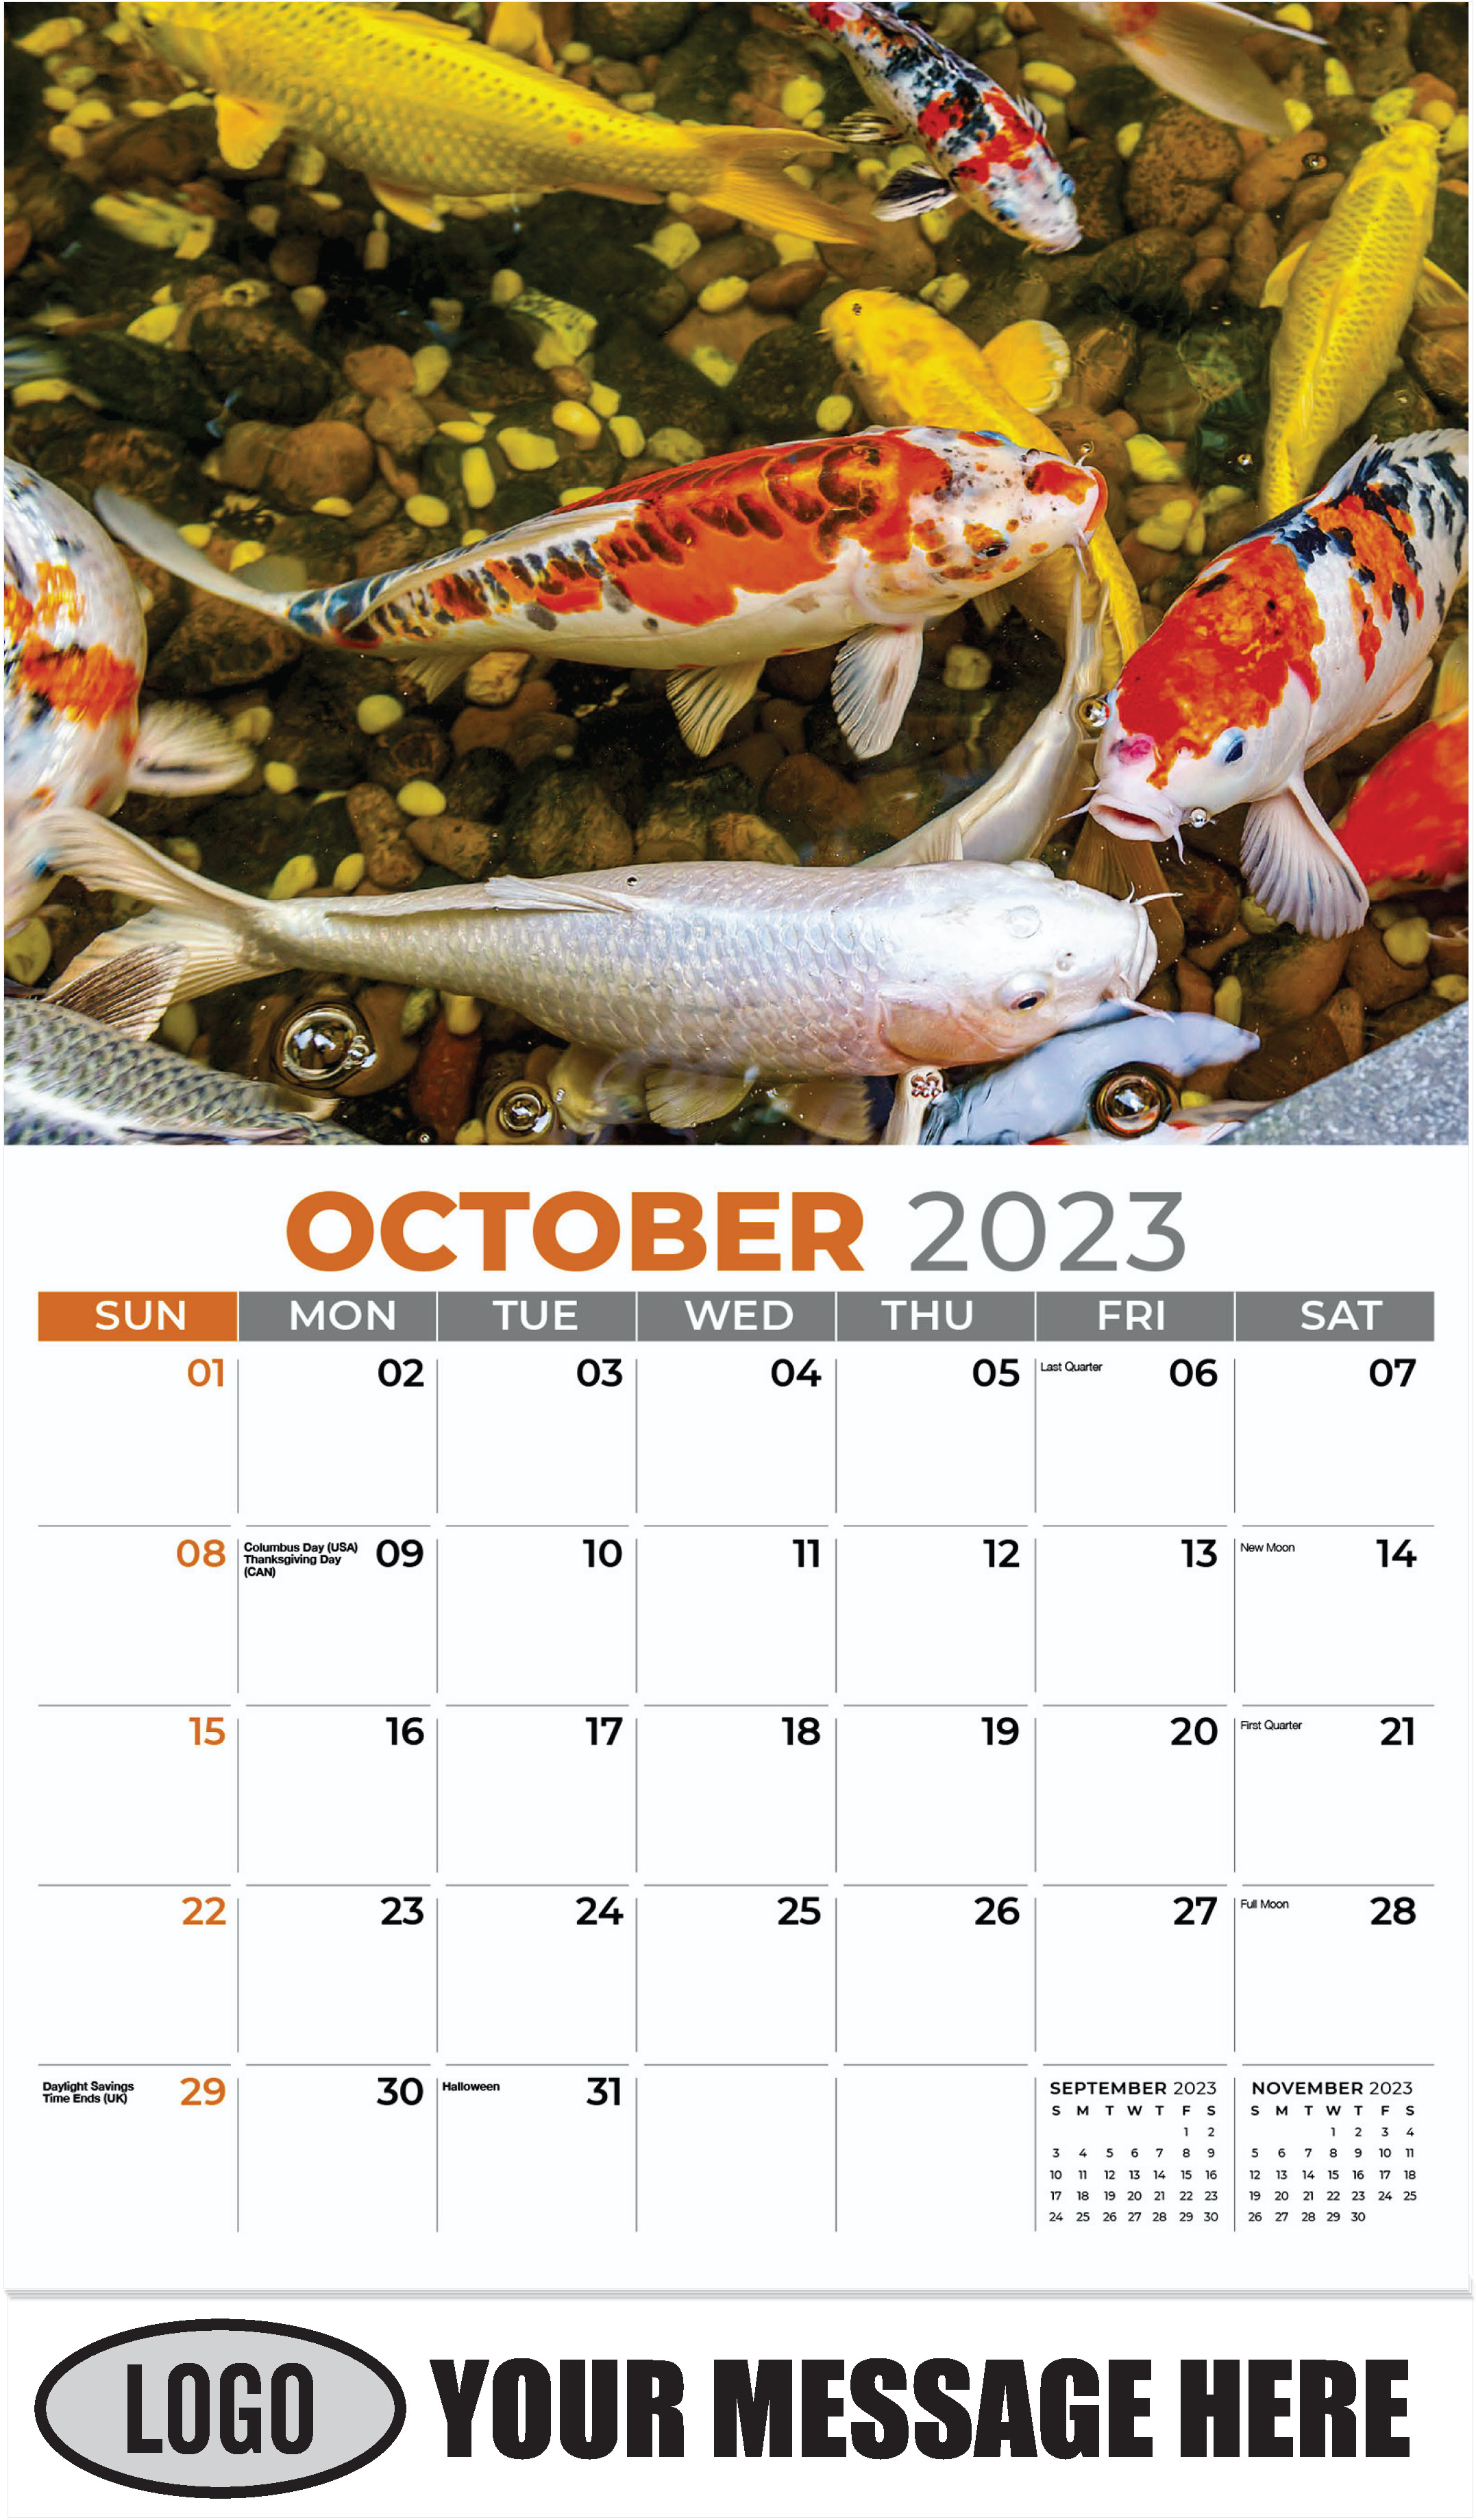 Japanese Koi Fish - October - Pets 2023 Promotional Calendar